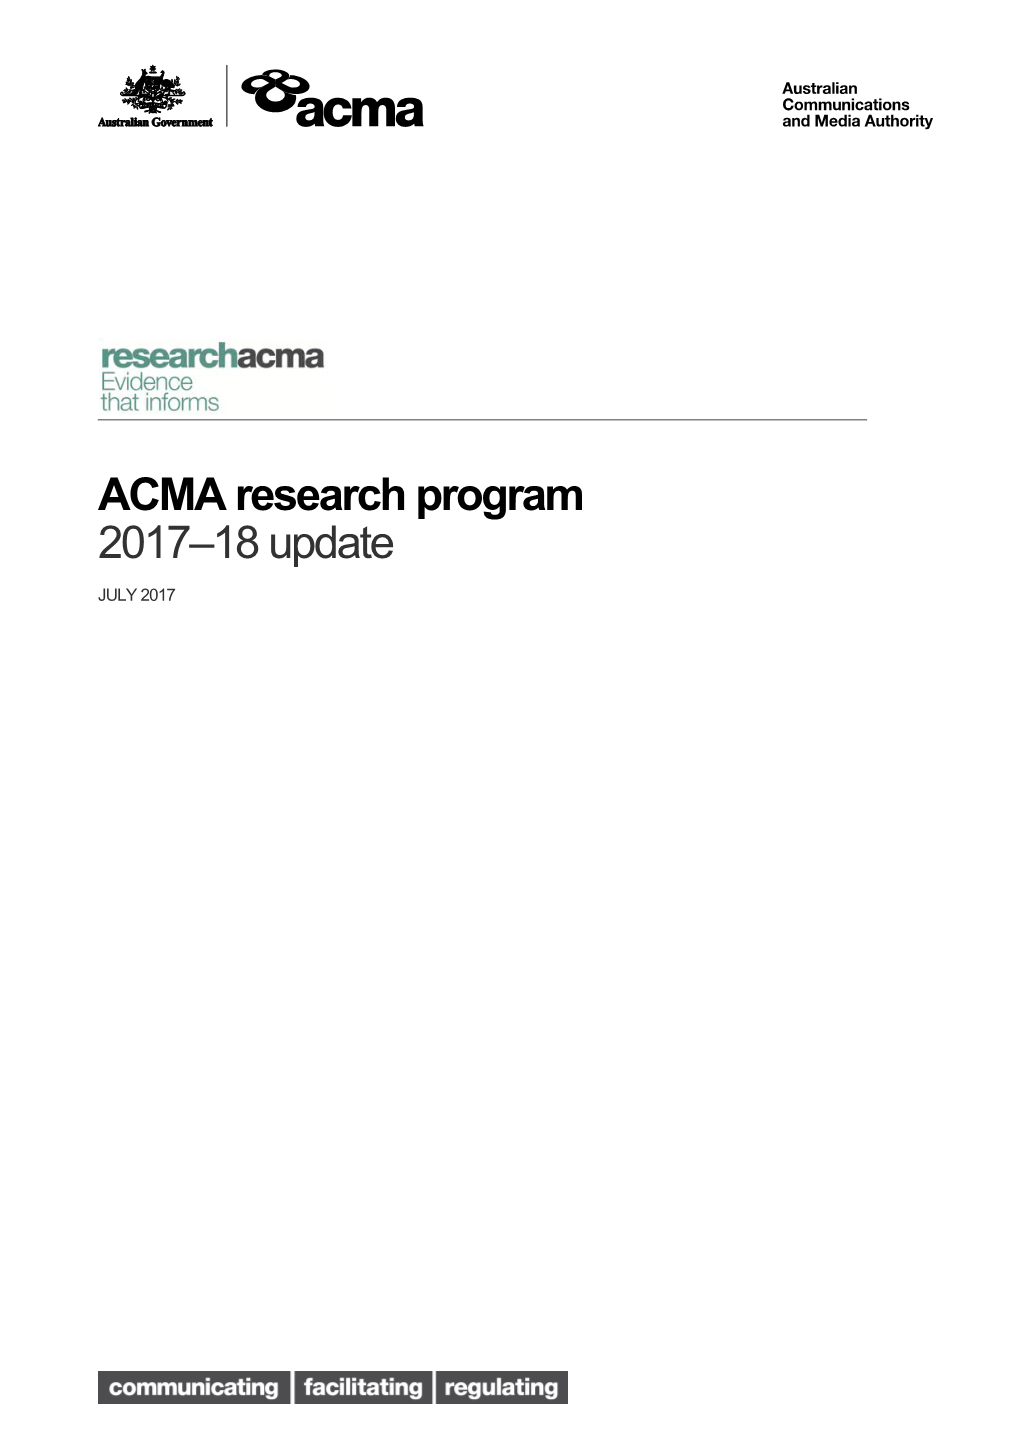 ACMA Research Program